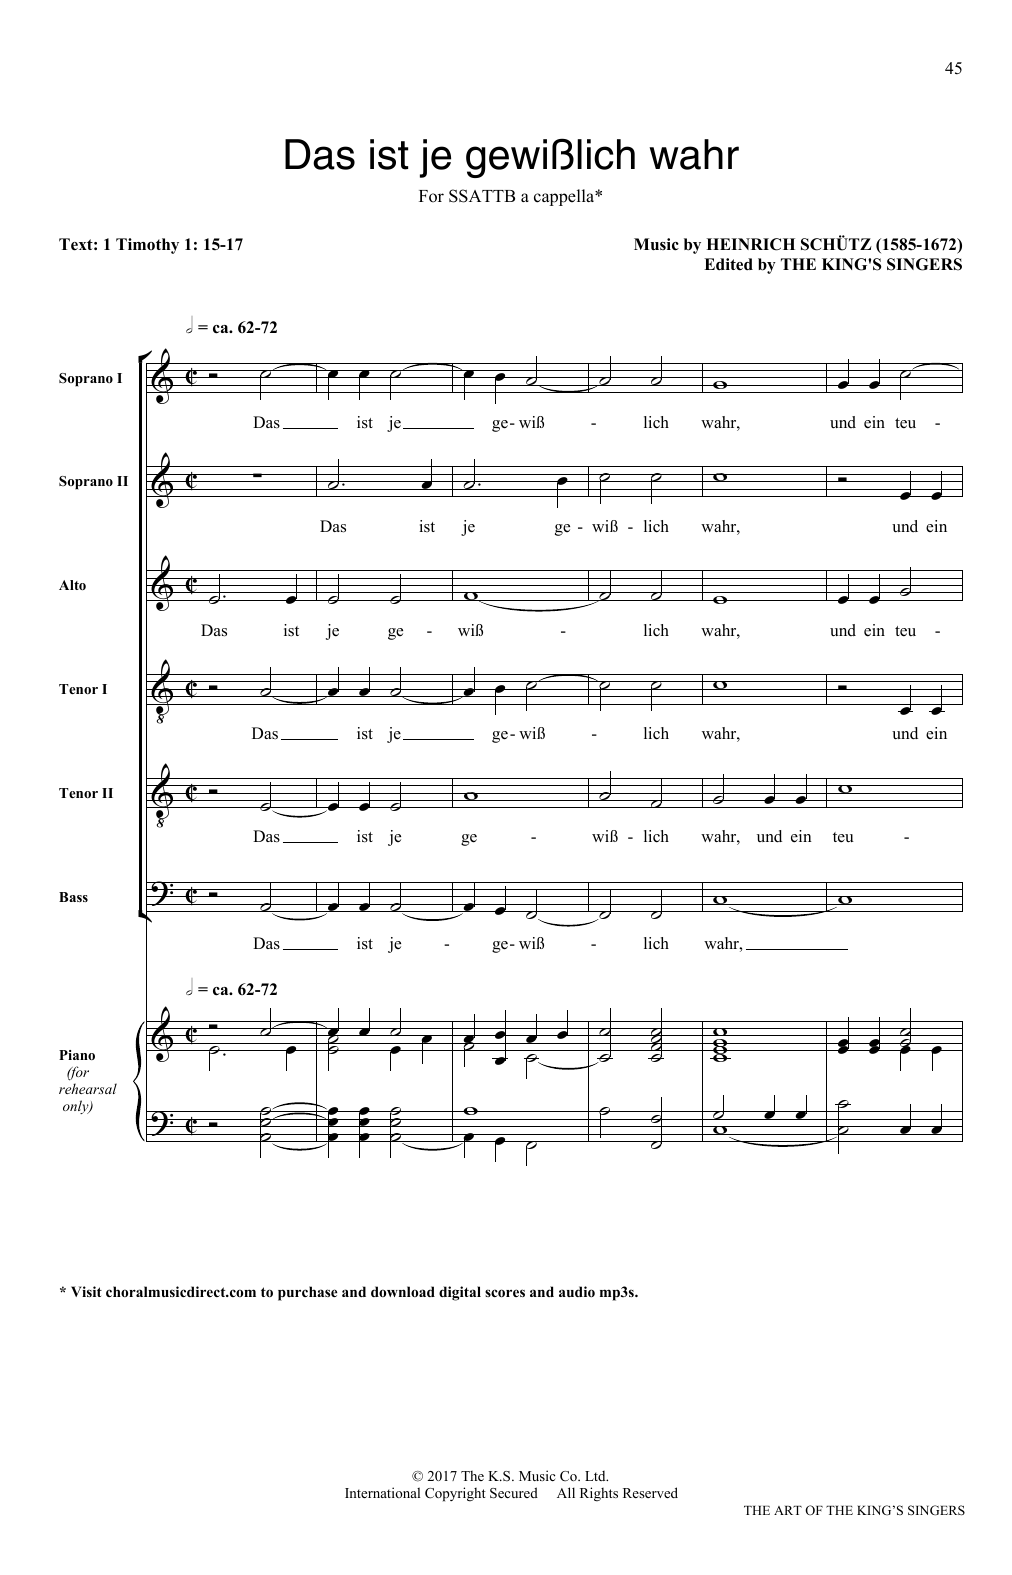 The King's Singers Das ist je gewusslich wahr sheet music notes and chords arranged for SATB Choir